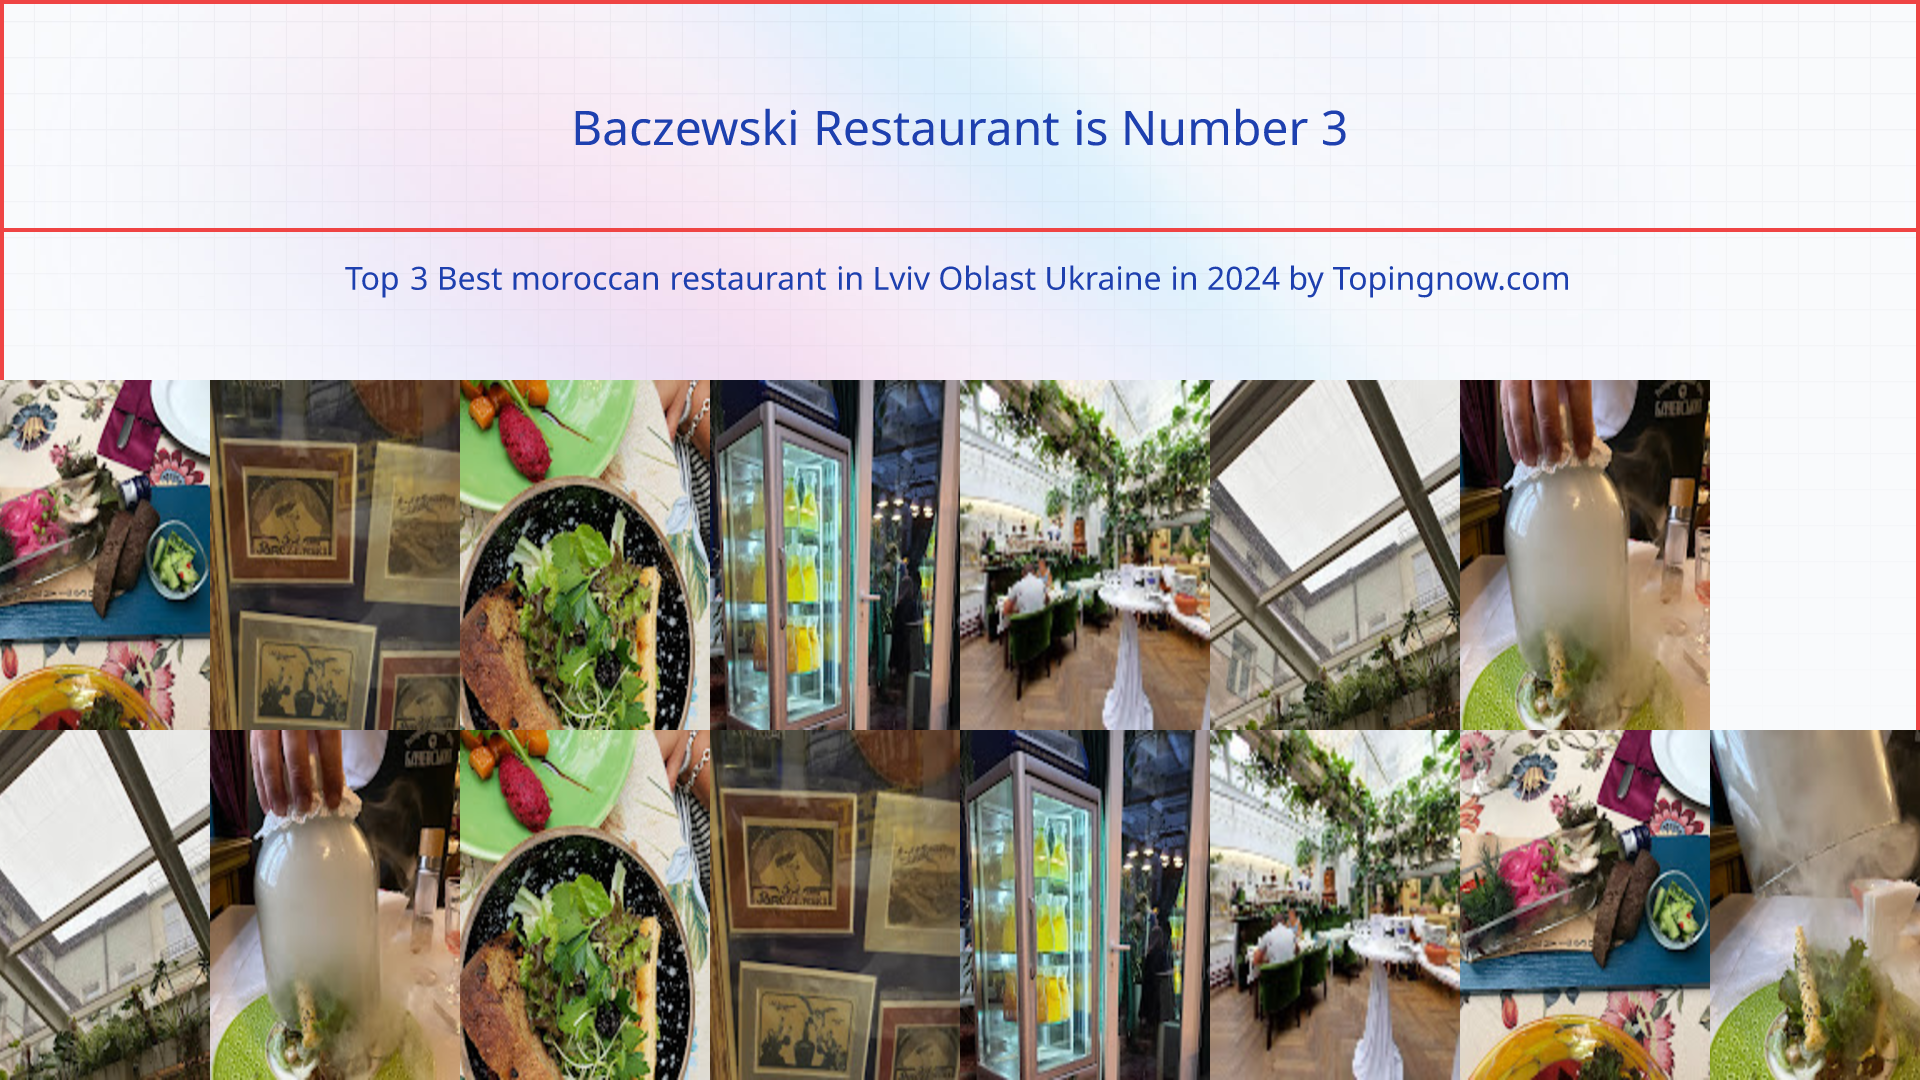 Baczewski Restaurant: Top 3 Best moroccan restaurant in Lviv Oblast Ukraine in 2024